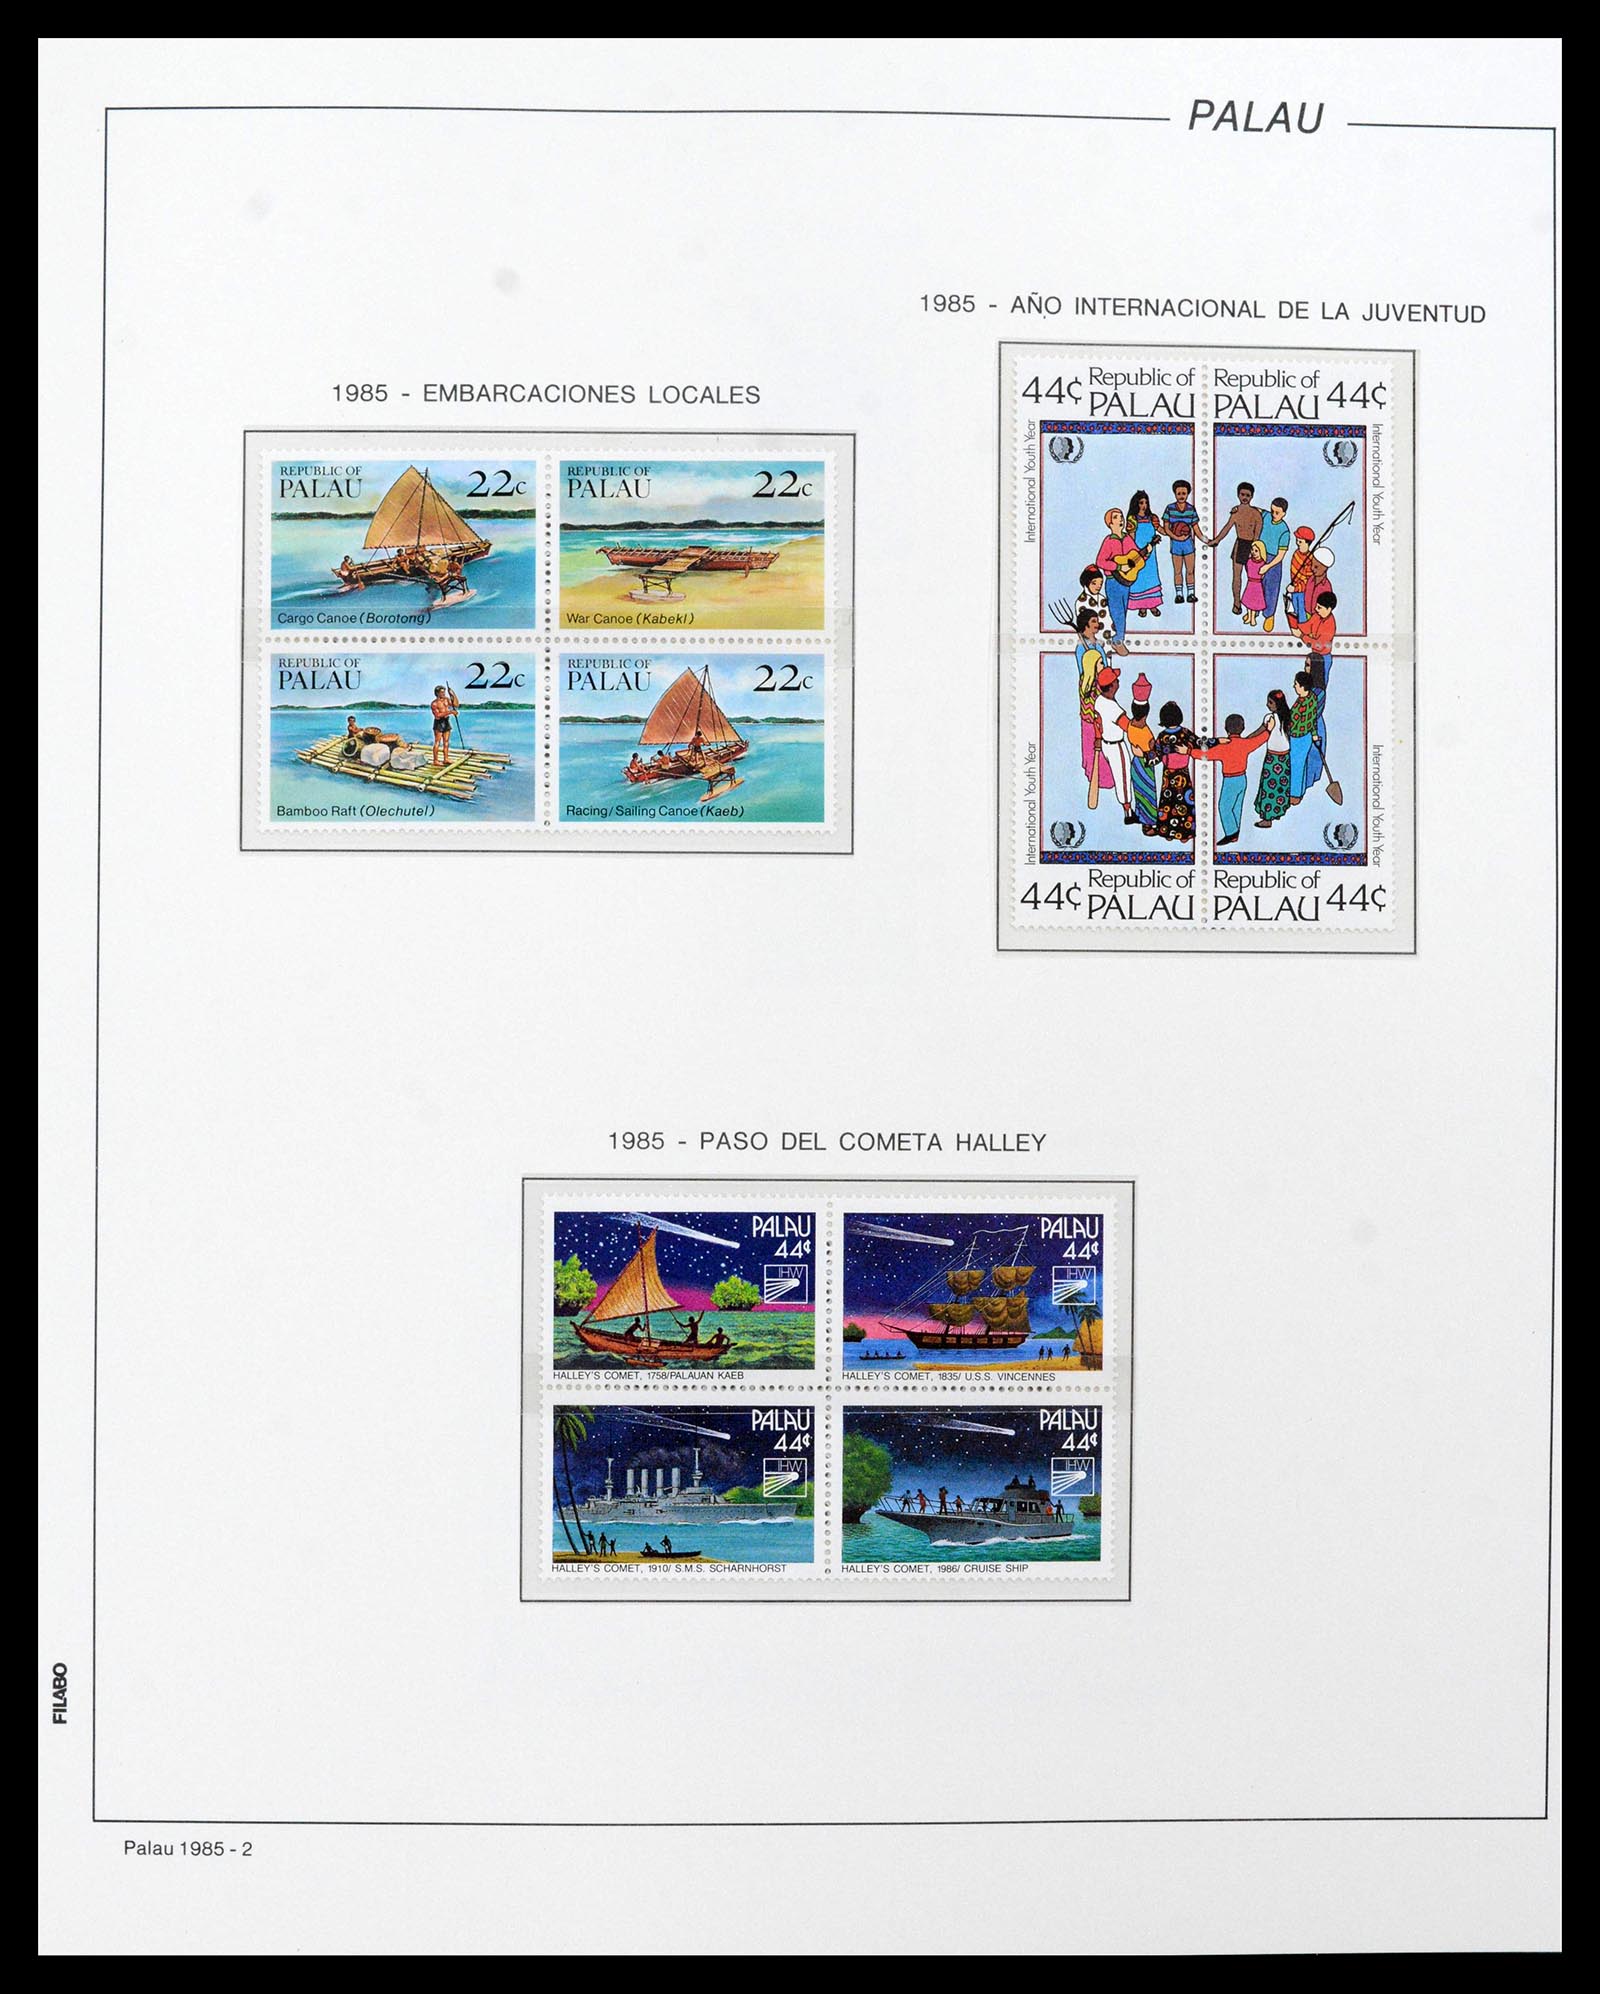 39222 0007 - Stamp collection 39222 Palau, Micronesia and Marshall islands 1980-1995.